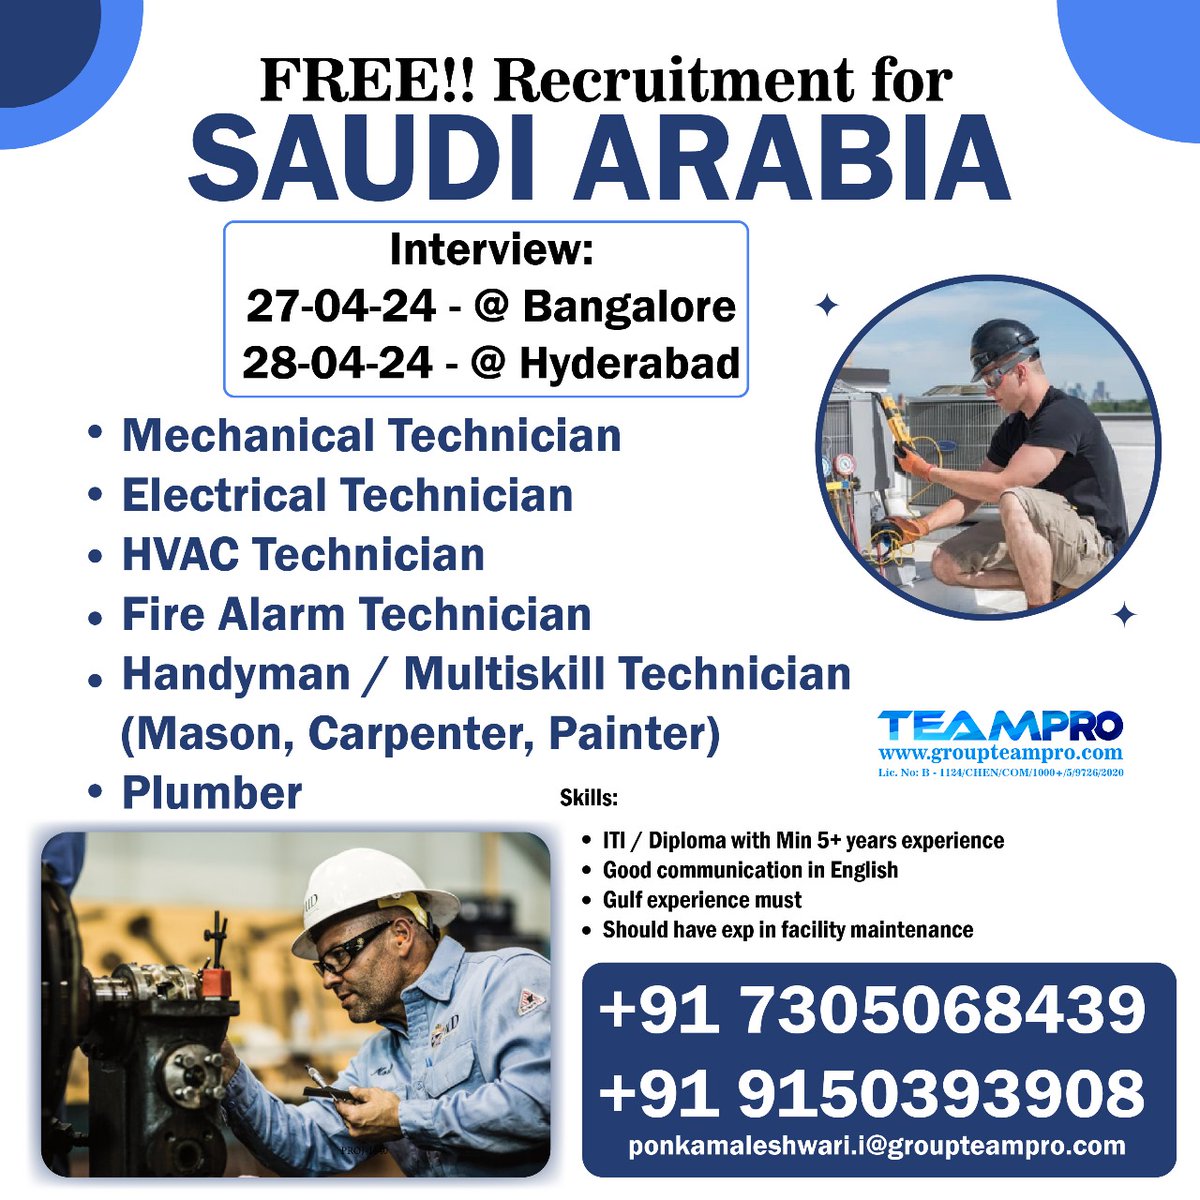 #freerecruitment #saudijobs #saudijobseekers #technician #electrical #mechanical #firealarm #hvac #plumber #facilitymaintenance #directinterview #shortlistingunderprogress #immediatejoiners